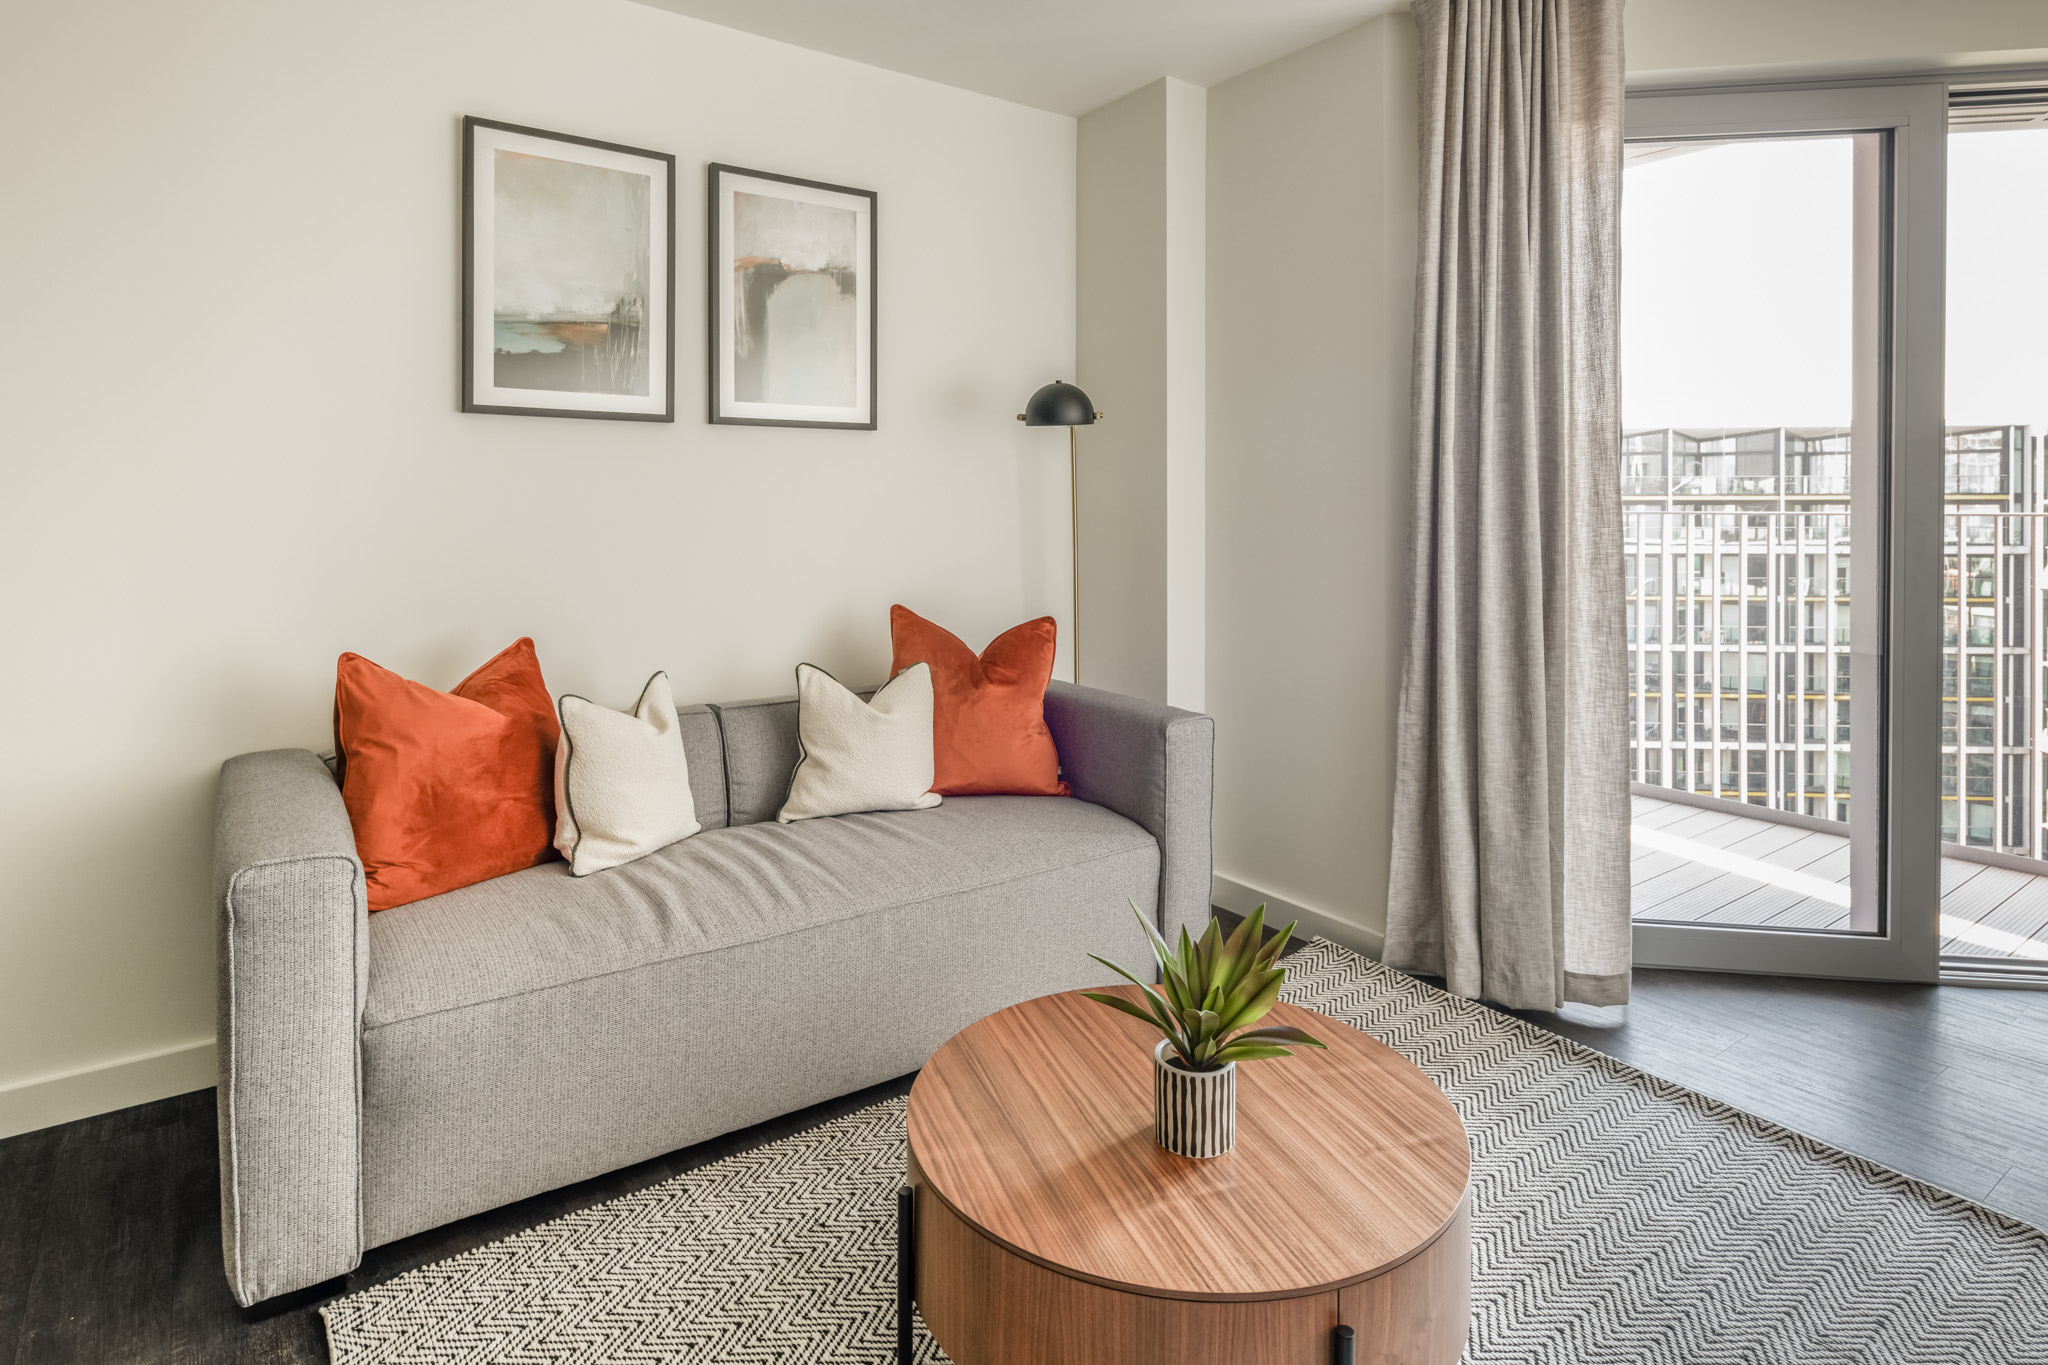 Sofa - Two Bedroom Apartment - Urban rest Battersea Apartments - London - Urban Rest